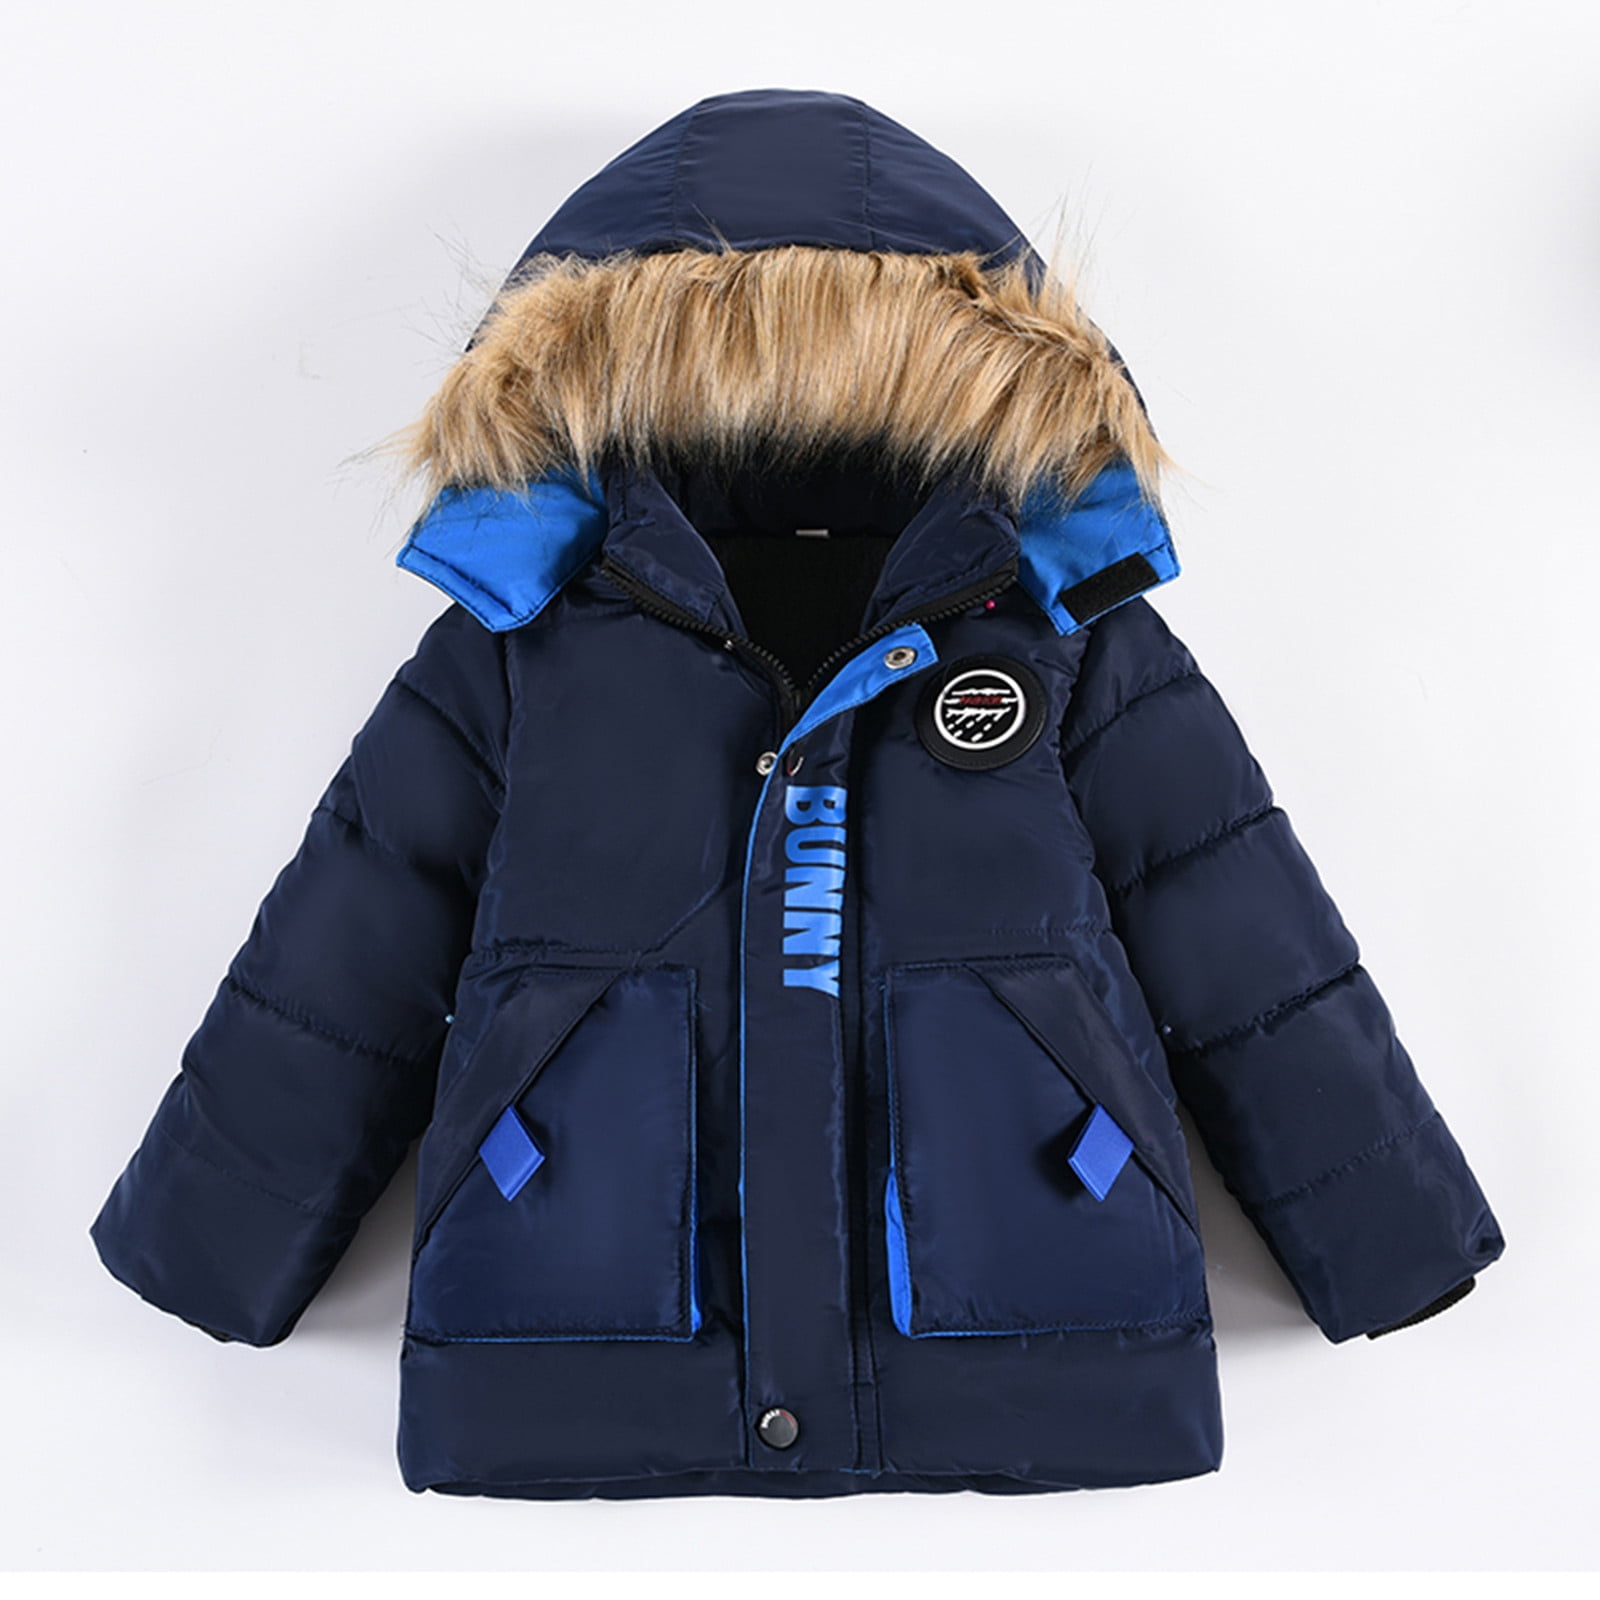 Aayomet Coat For Boy Kids Jackalope Insulated Winter Jacket, Island ...